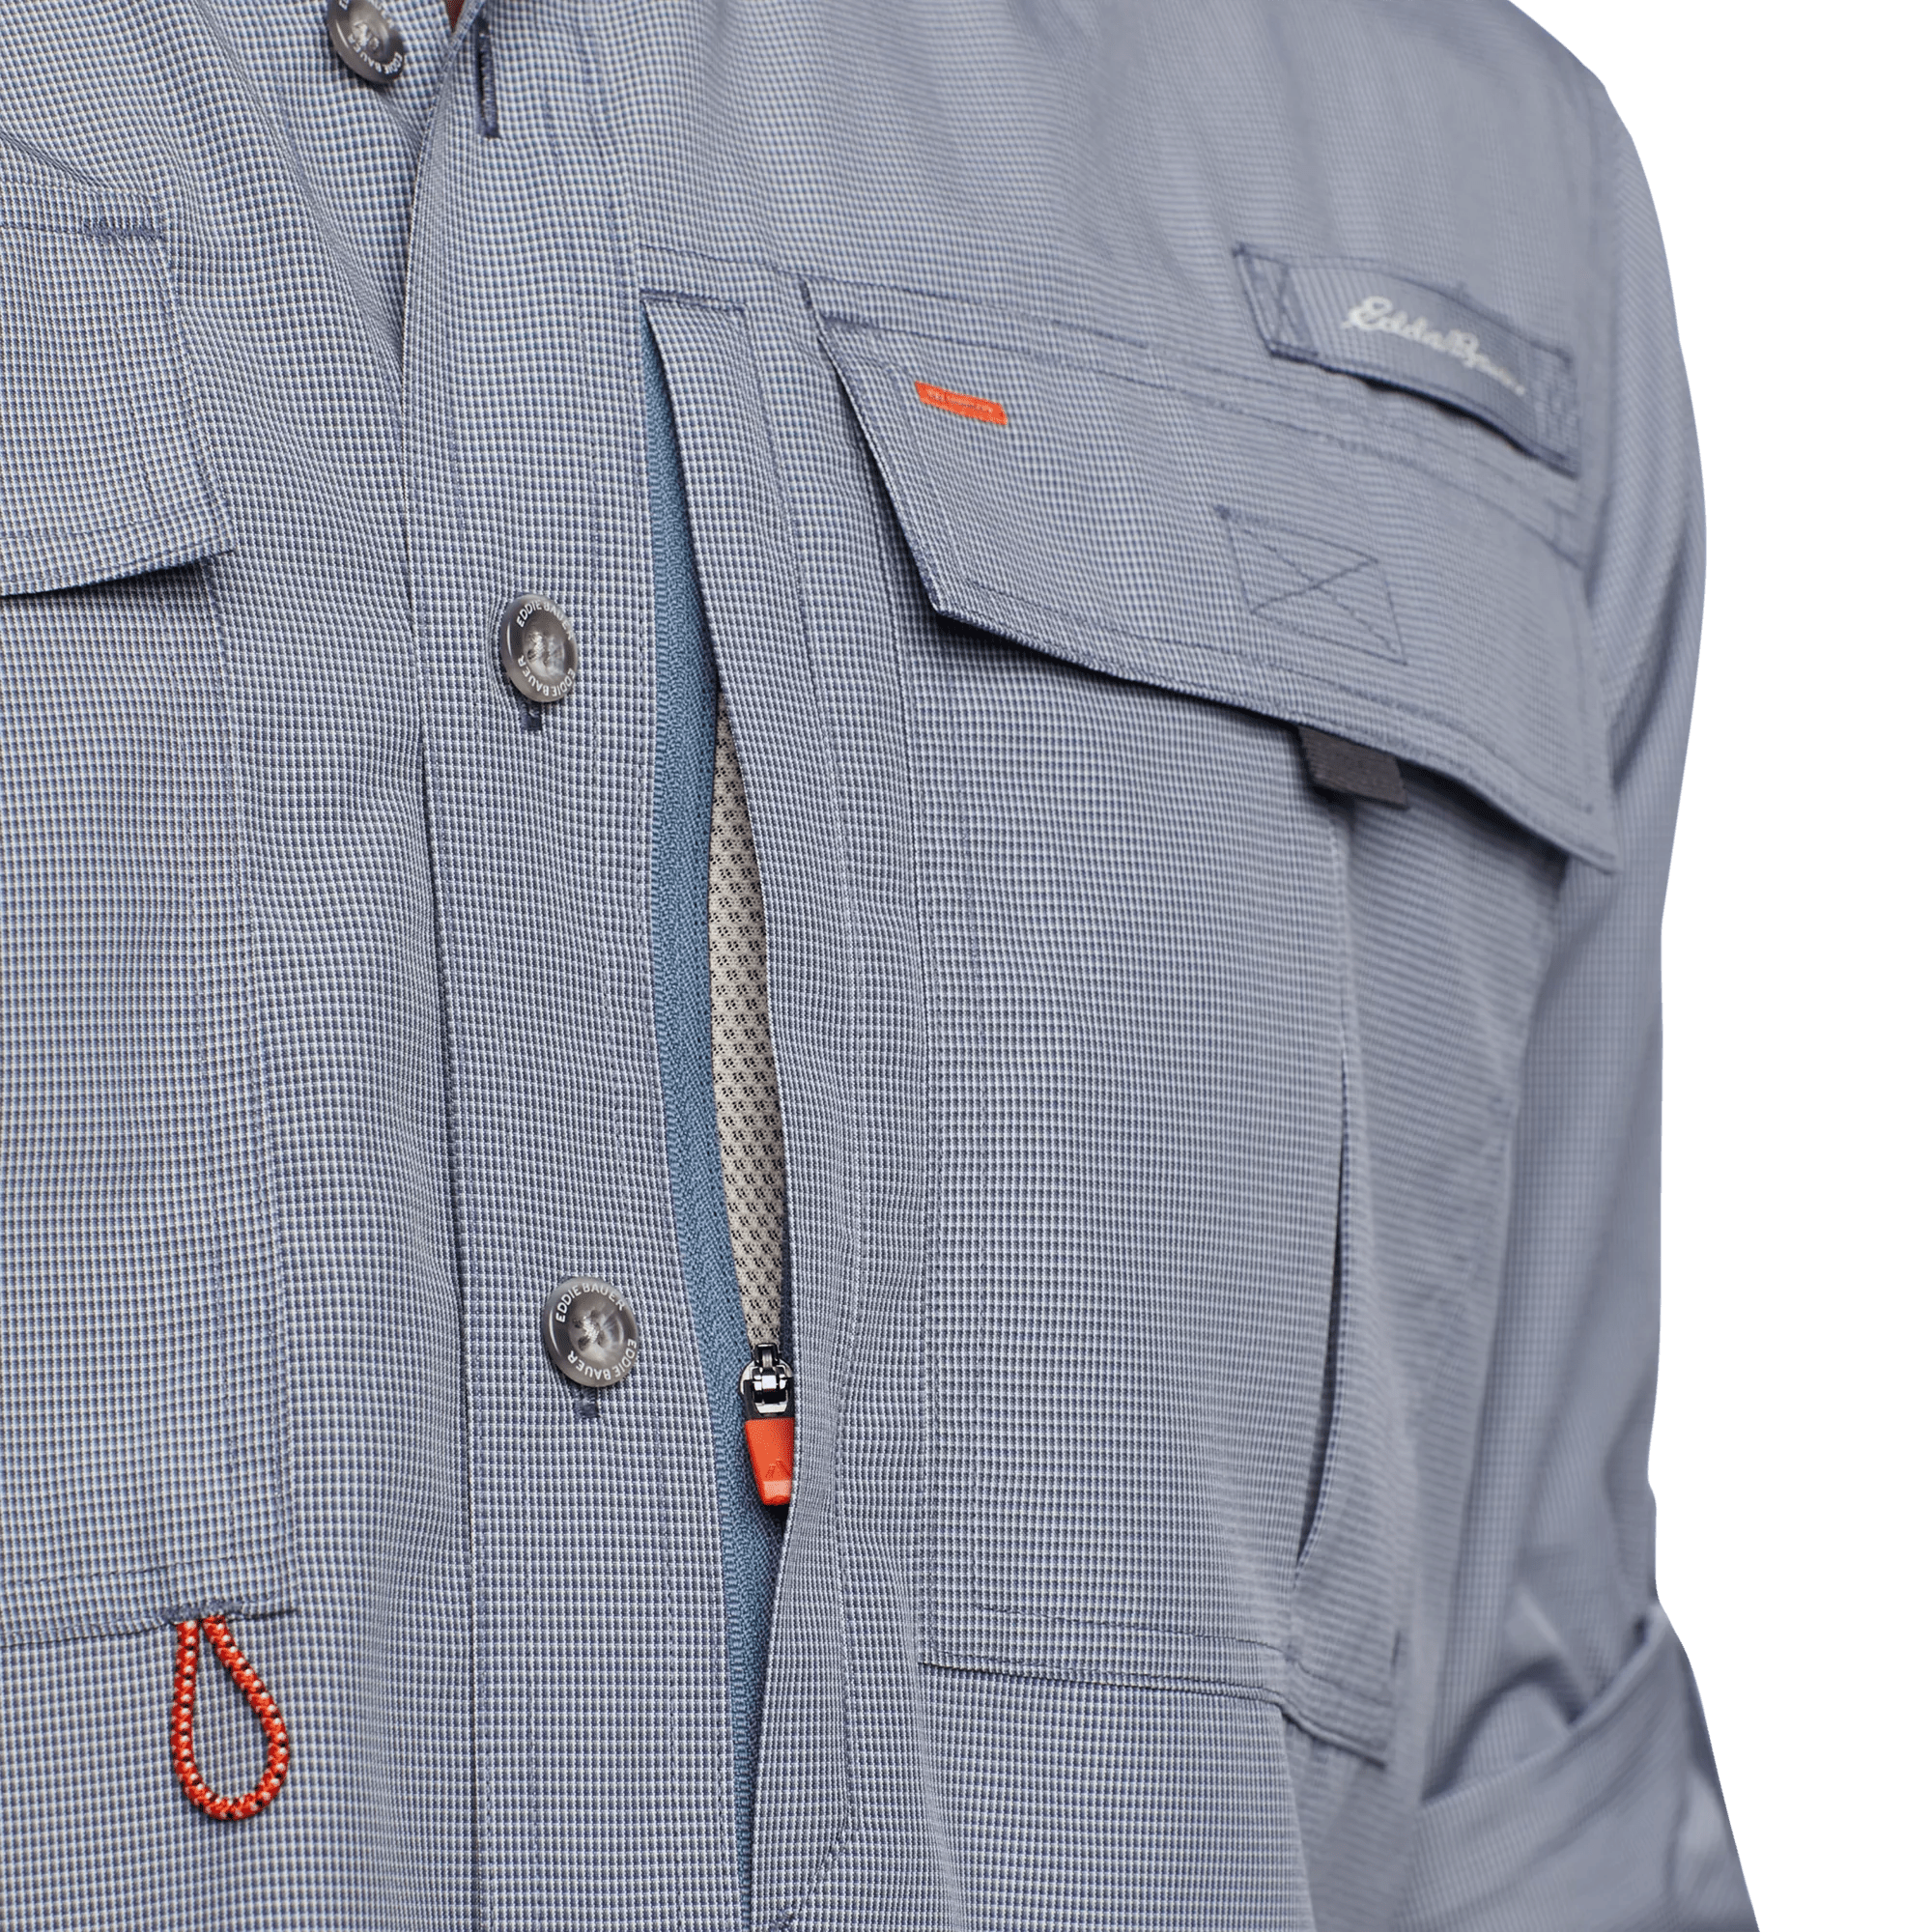 UPF Guide 2.0 Long-Sleeve Shirt